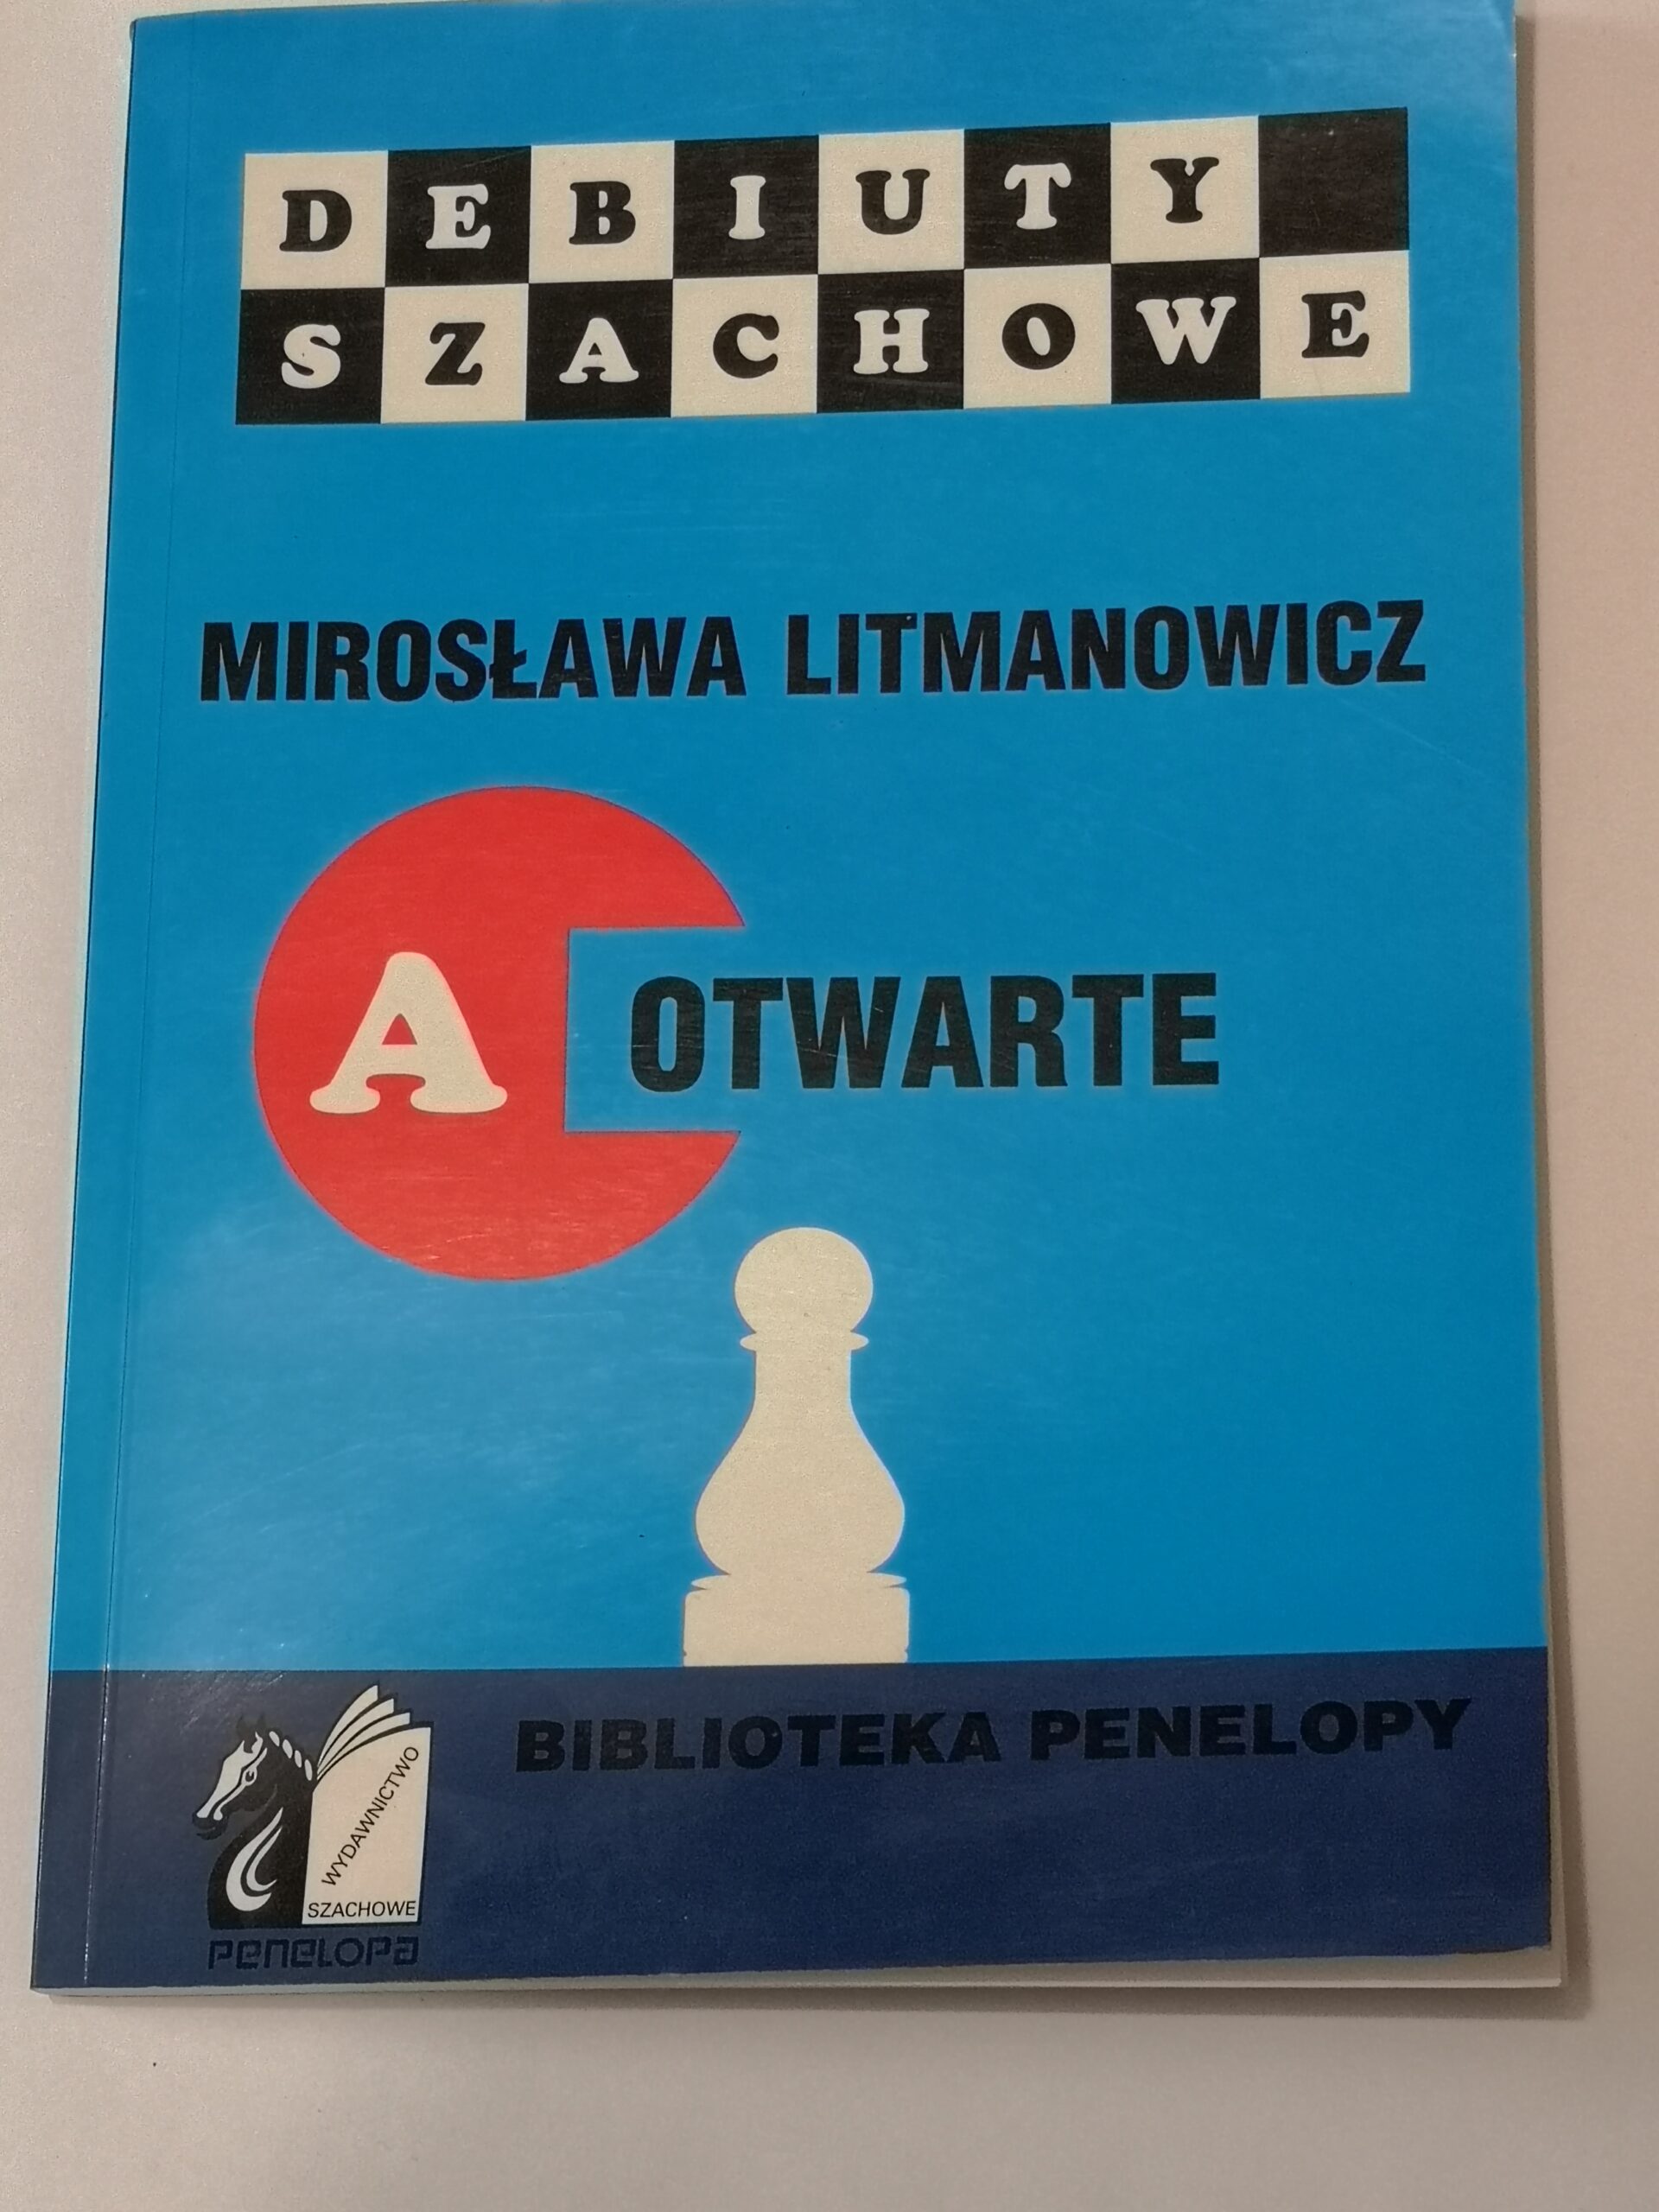 637# Debiuty szachowe otwarte (M.Litmanowicz)